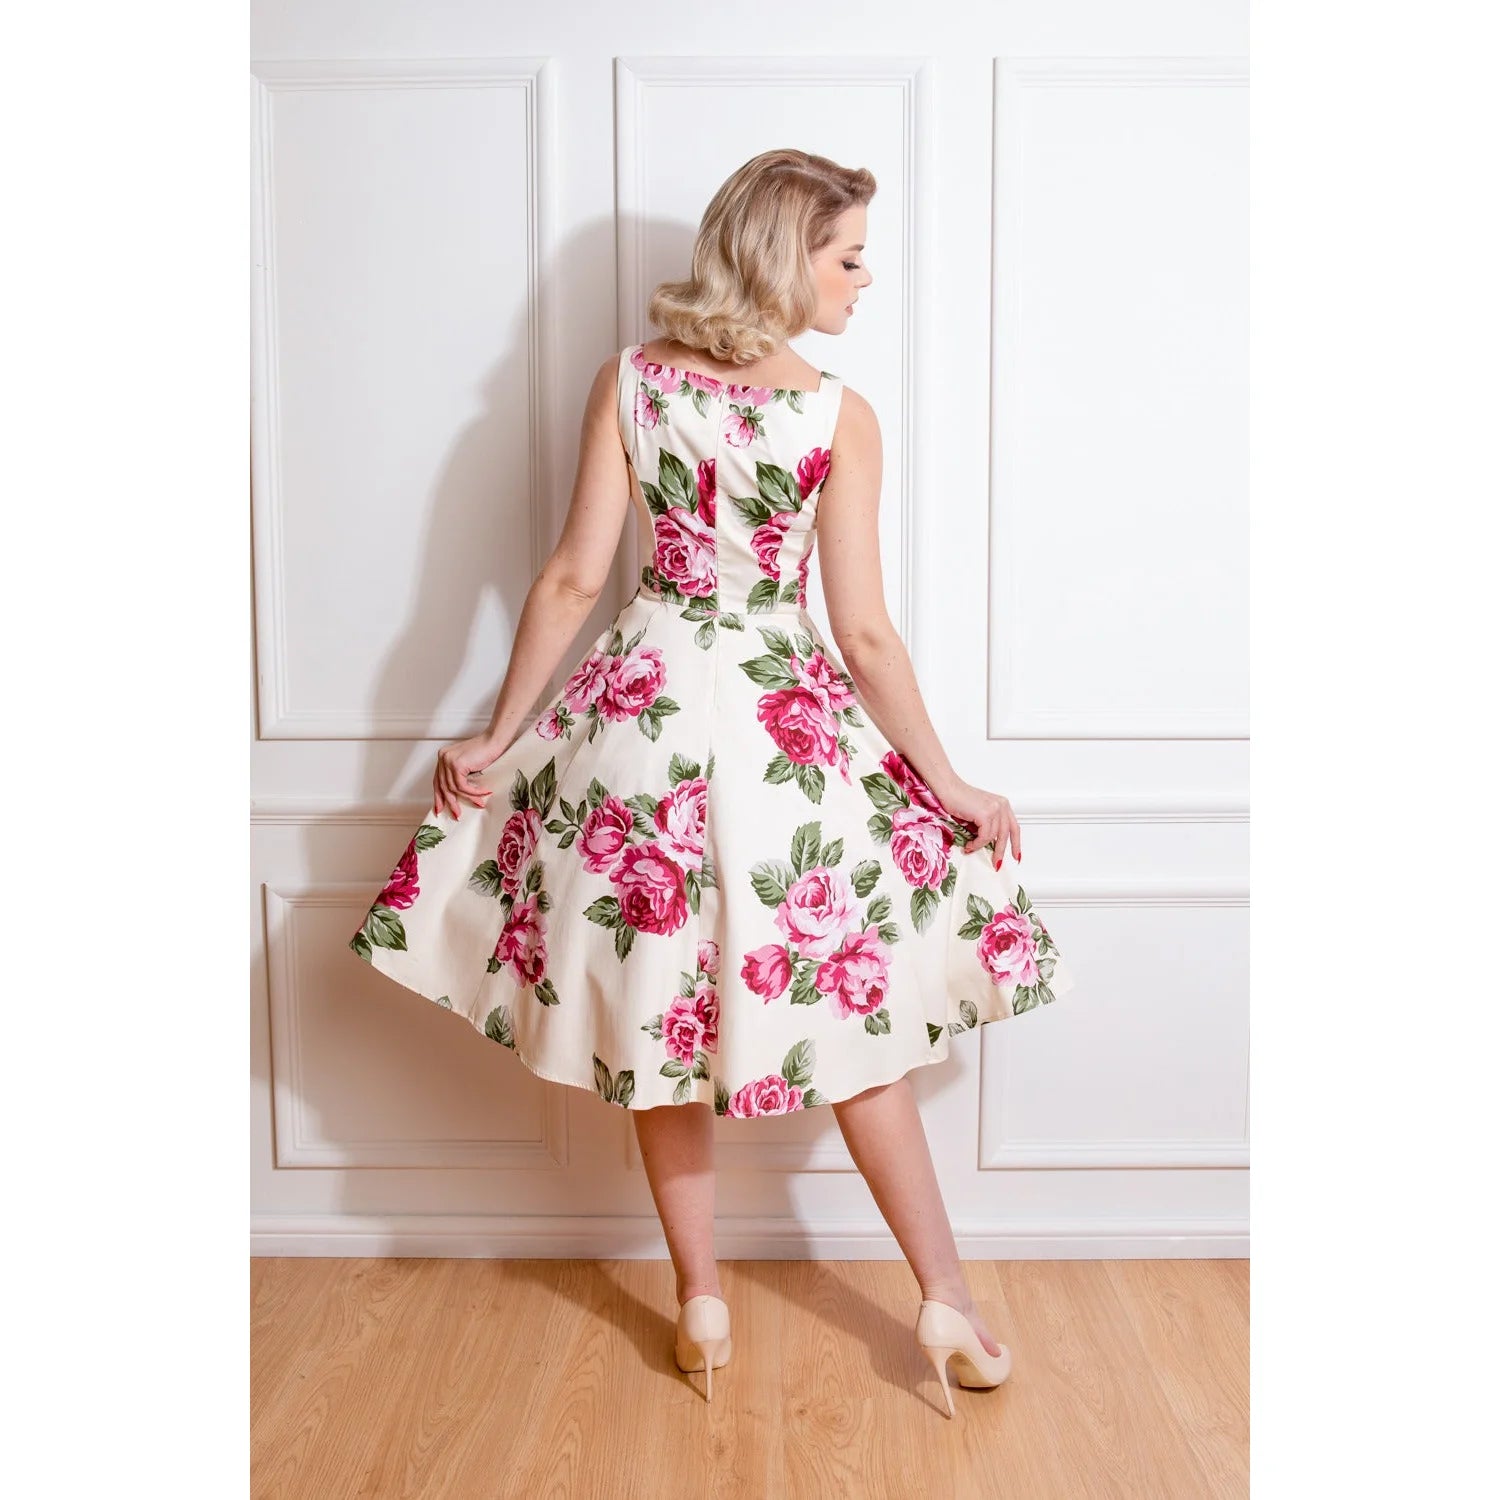 Cream Rose Floral Print Sleeveless Rockabilly 50s Swing Dress